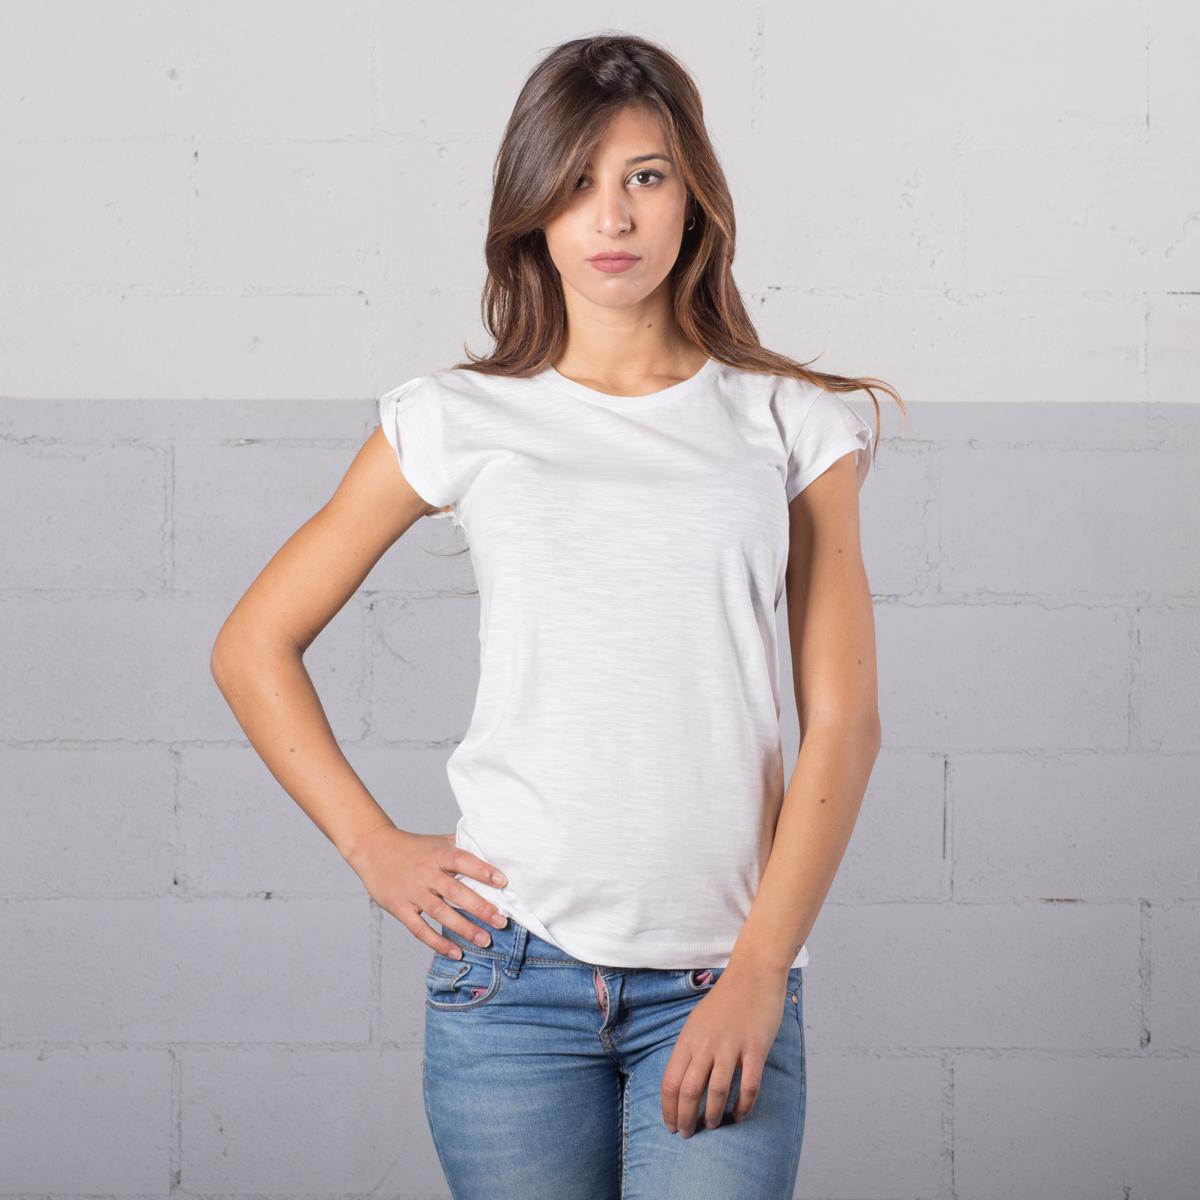 T-shirt Donna Bianca 100% cotone fiammato BEST SELLER